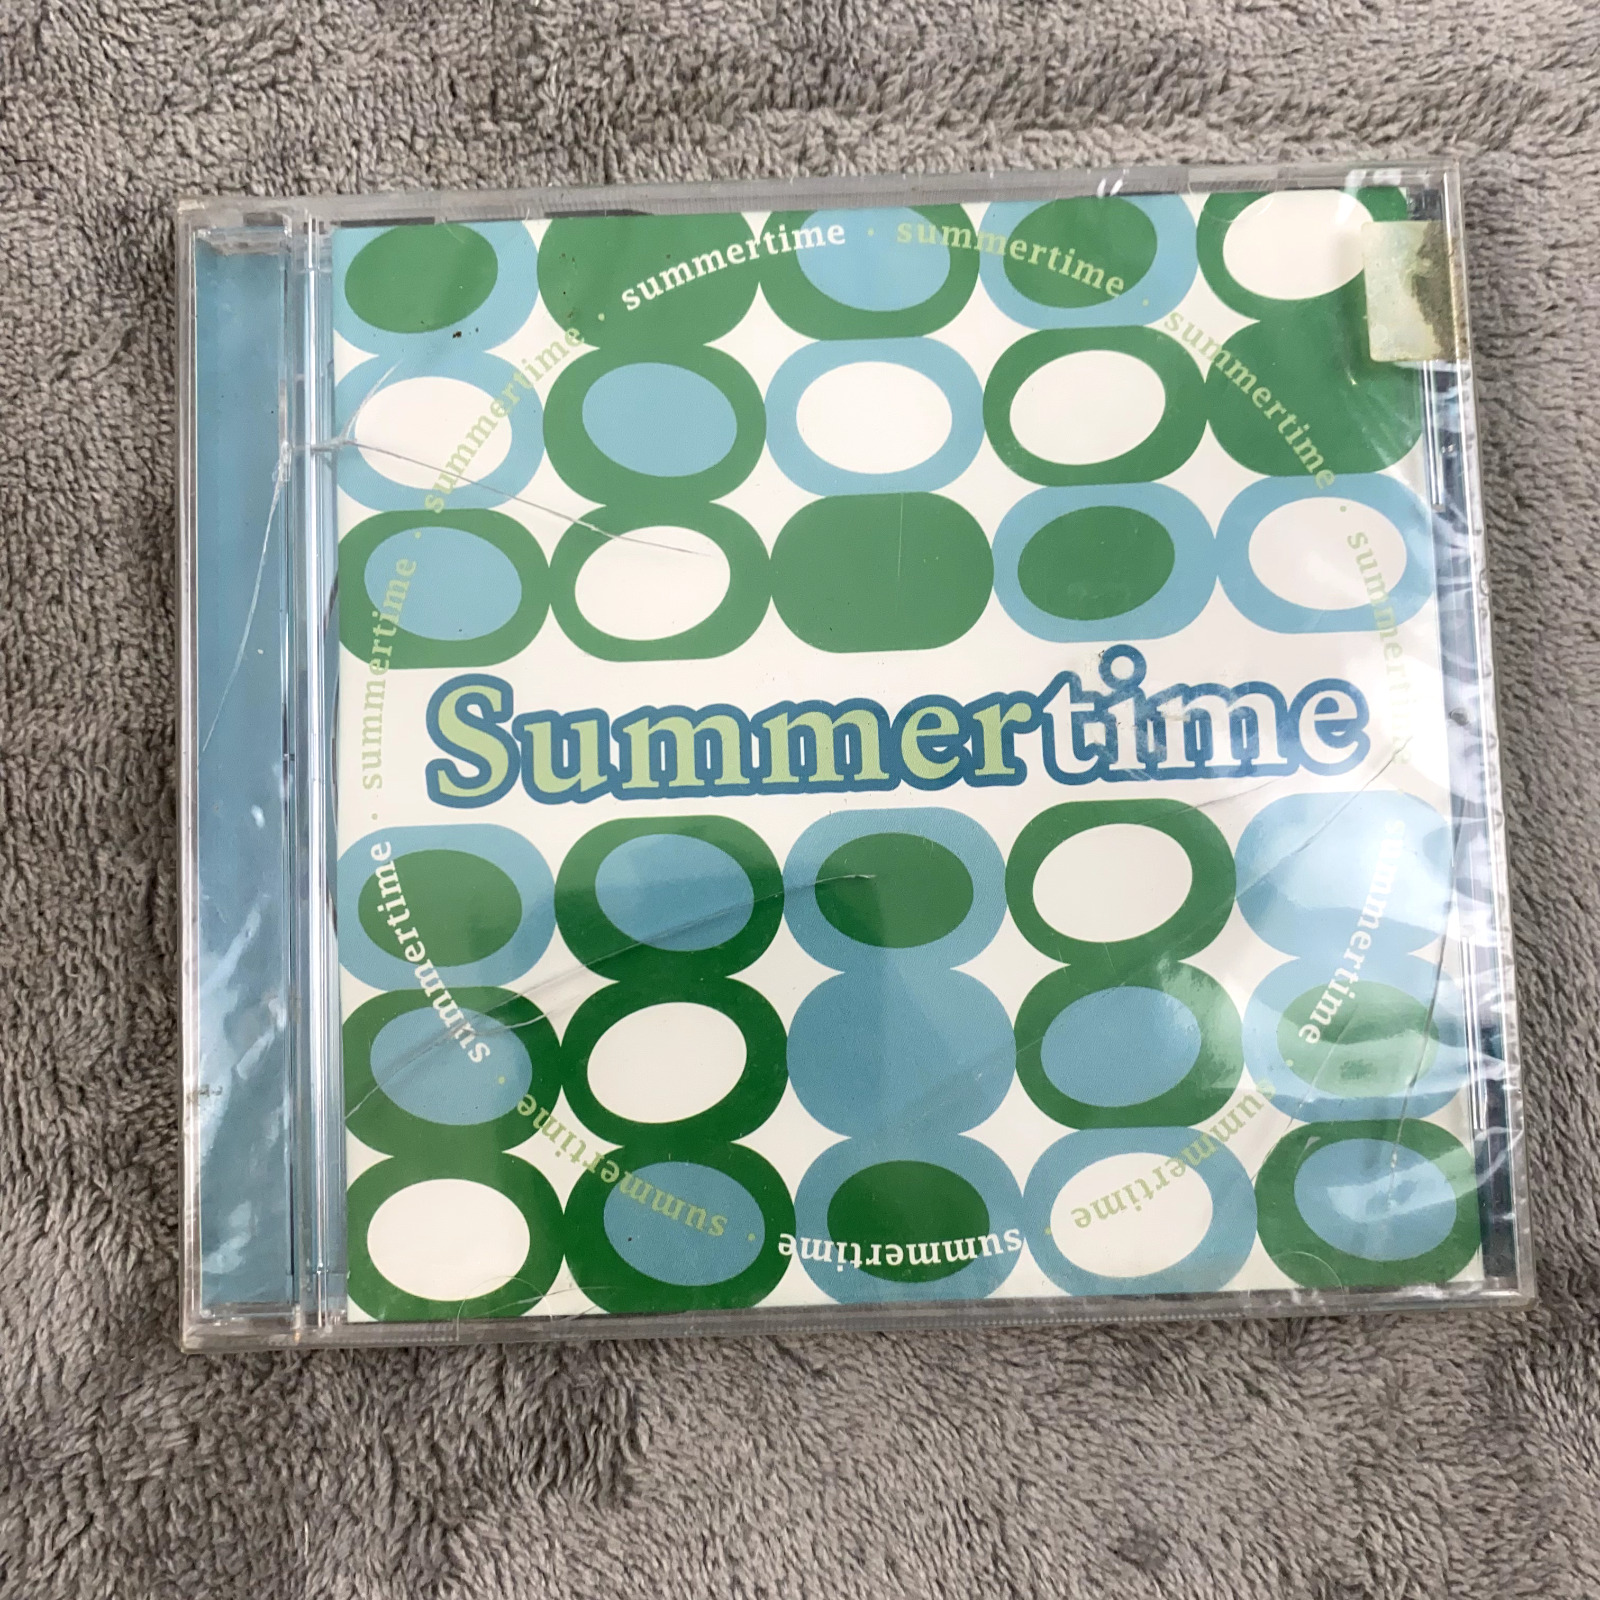 Summertime by Various Artist (CD, 2006, Target) Island Music